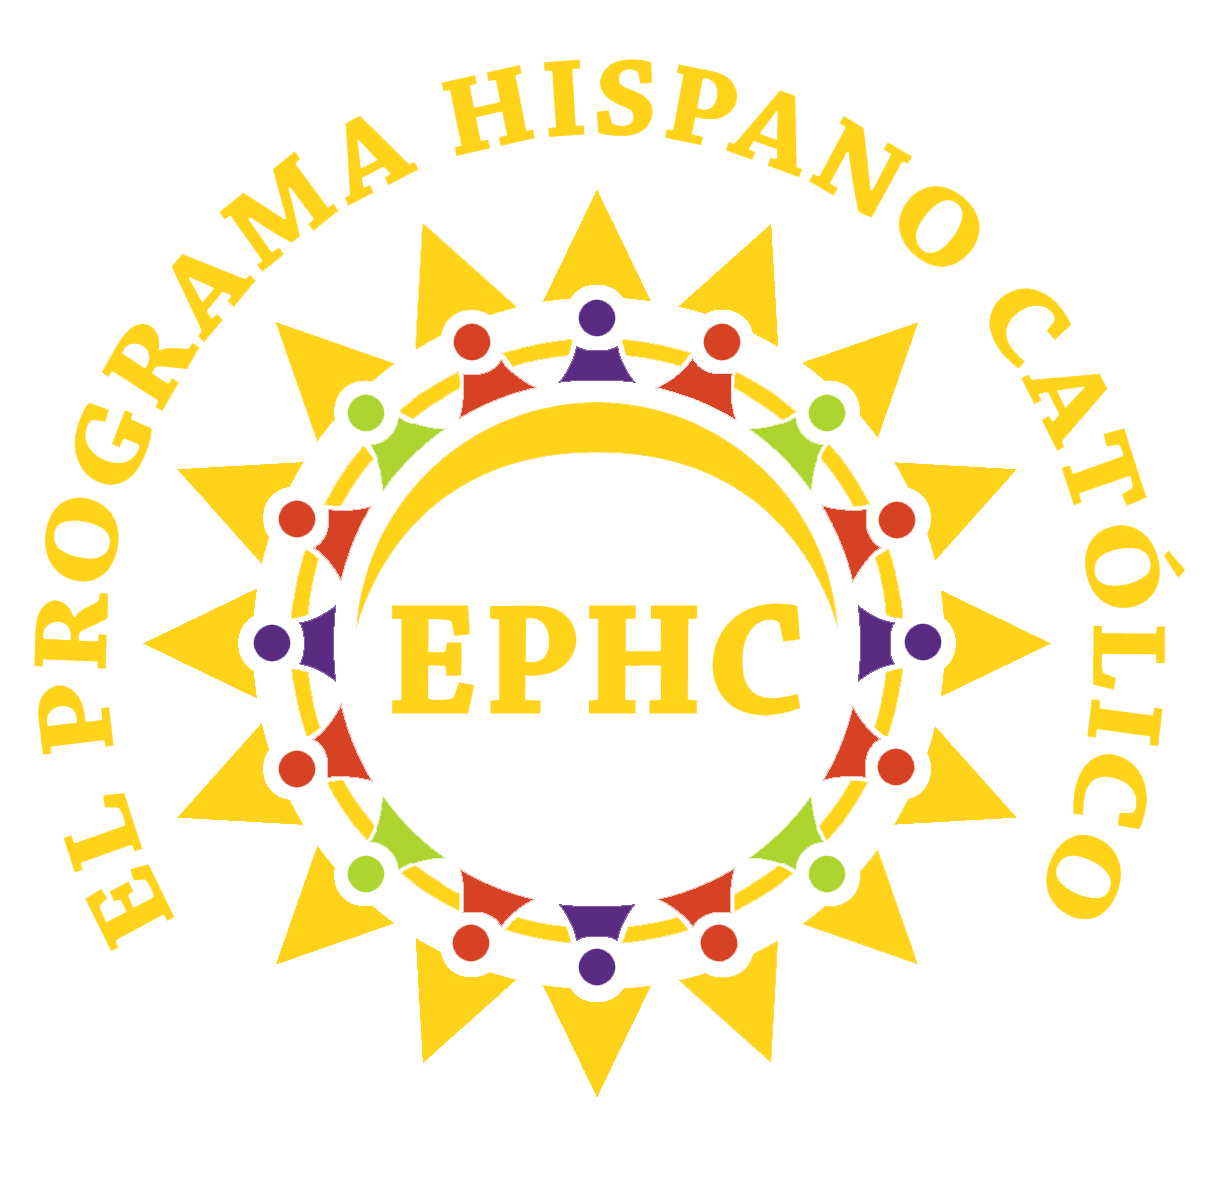 EPHC